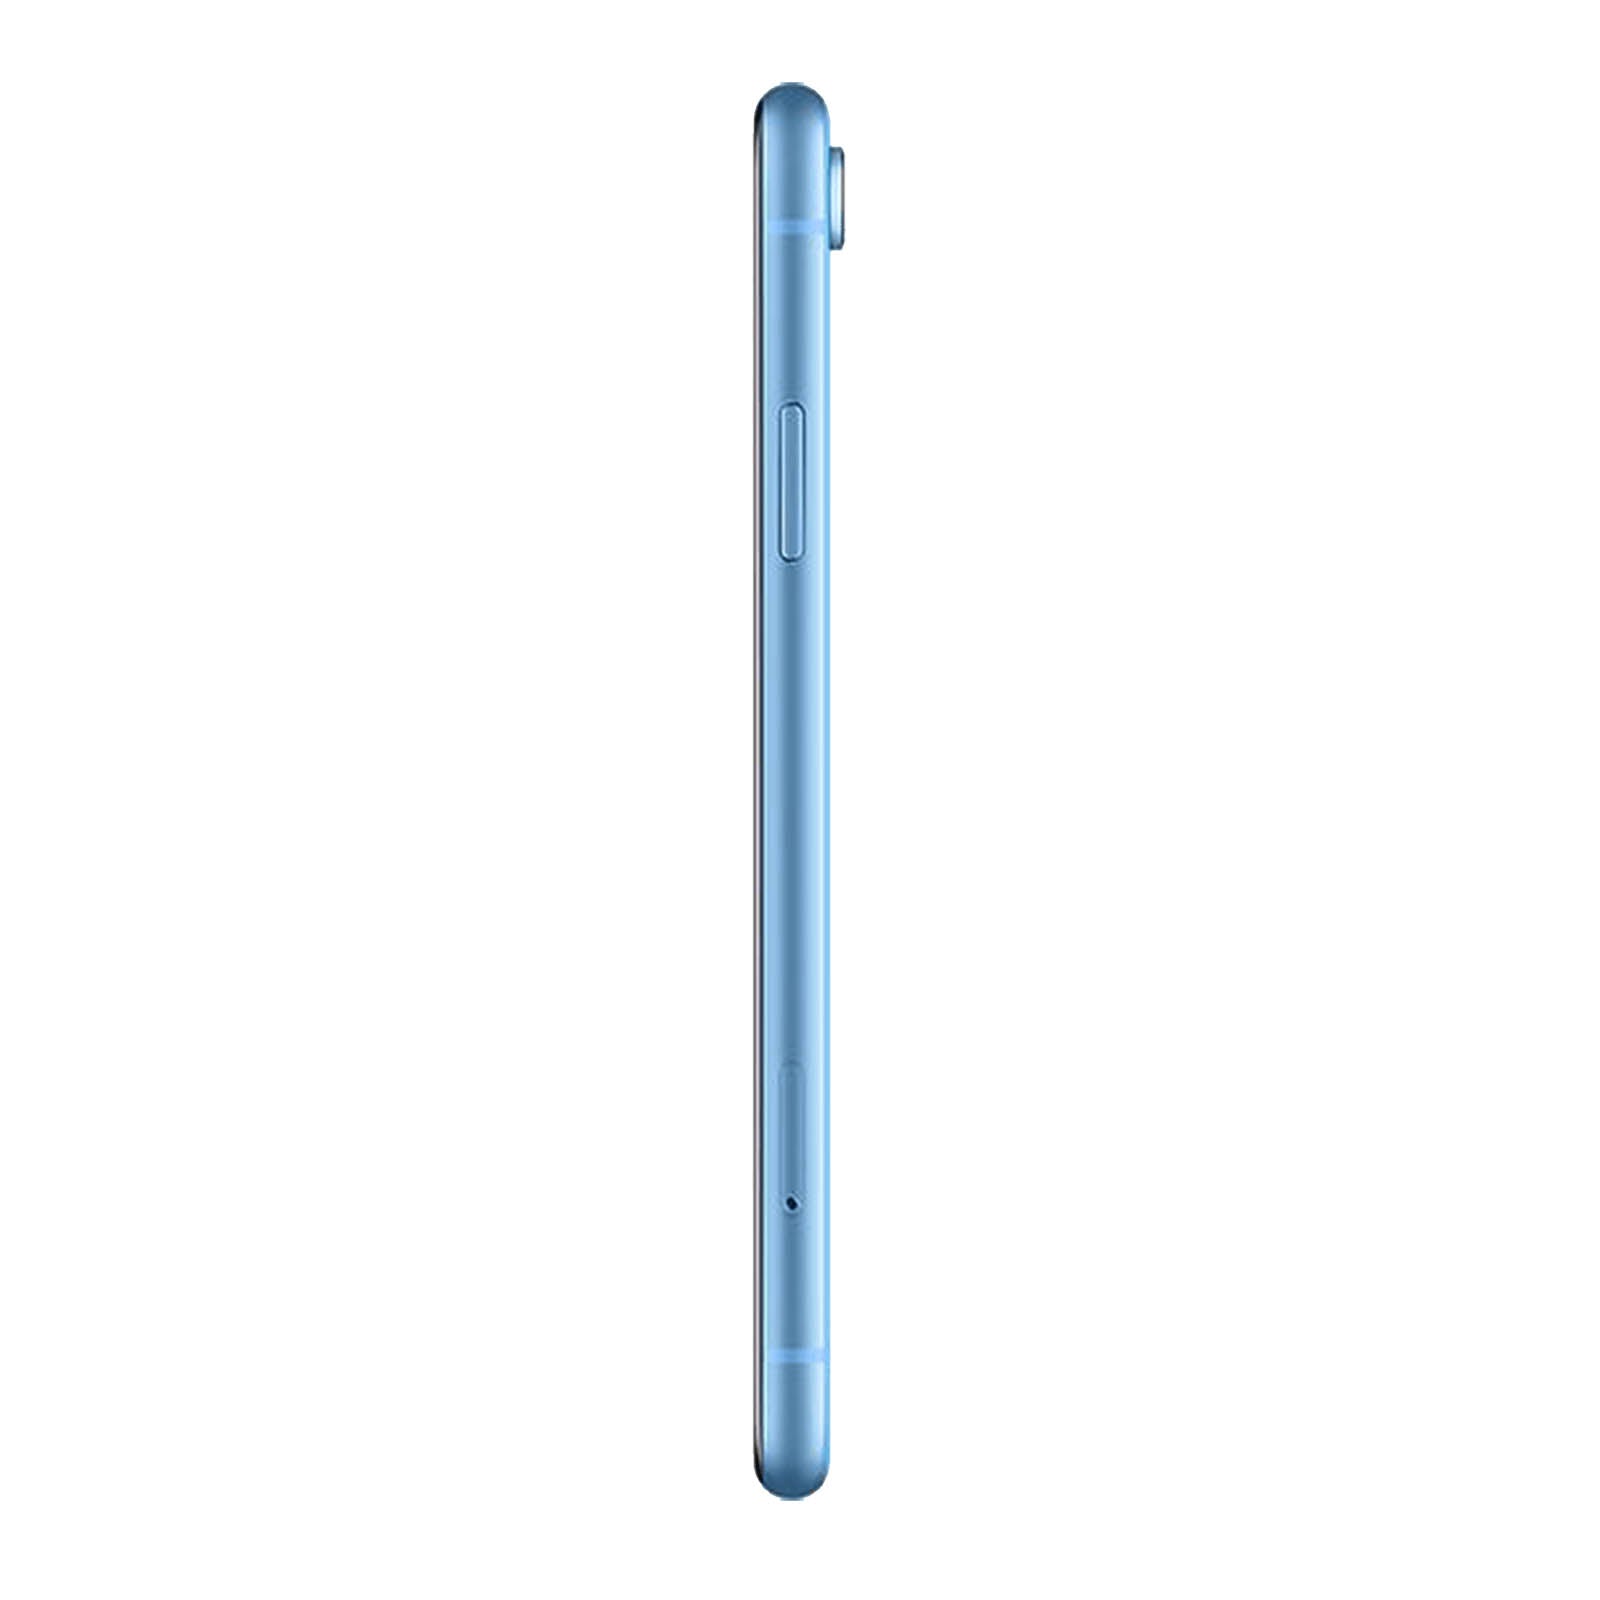 Apple iPhone XR 64GB Blue Good - Sprint